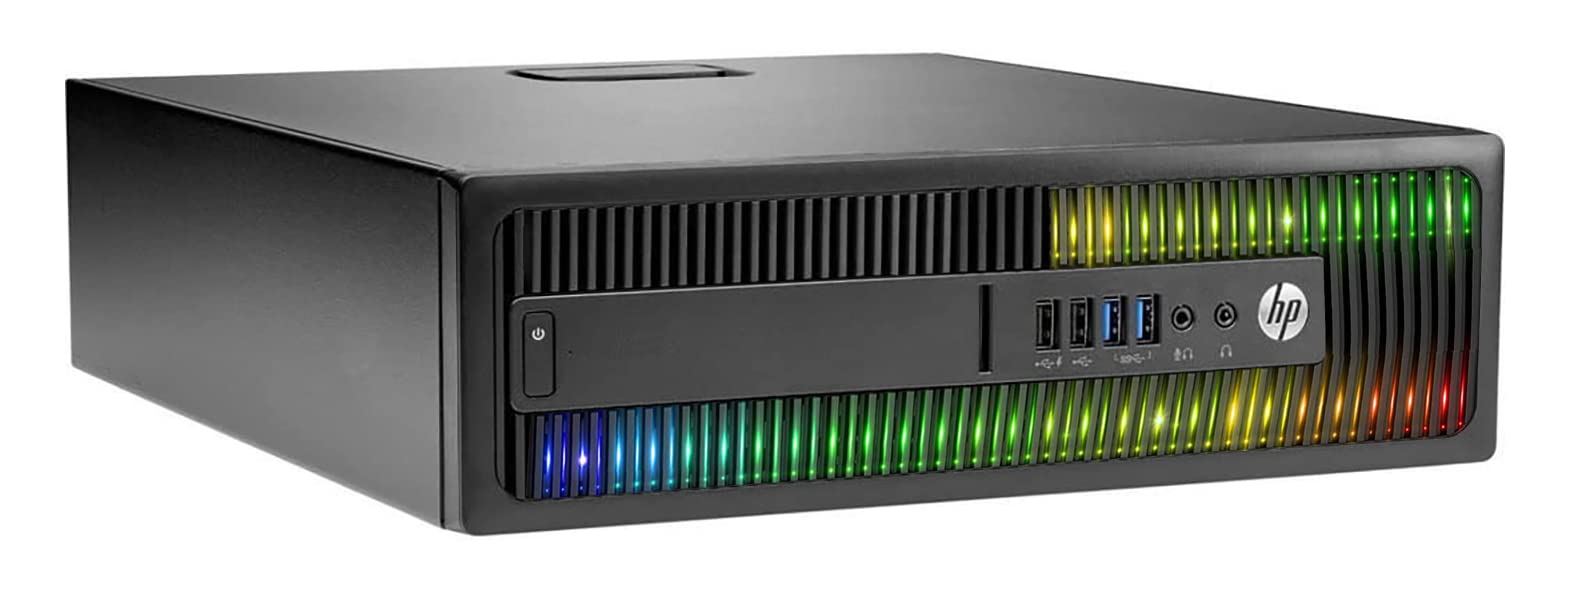 HP RGB Lights PC Desktop Computer Intel Core i7-6700 3.40Ghz Proccesor 32GB DDR4 Ram 1TB SSD, NVIDIA GeForce GT 1030 Graphics, Windows 10 Pro (Renewed)